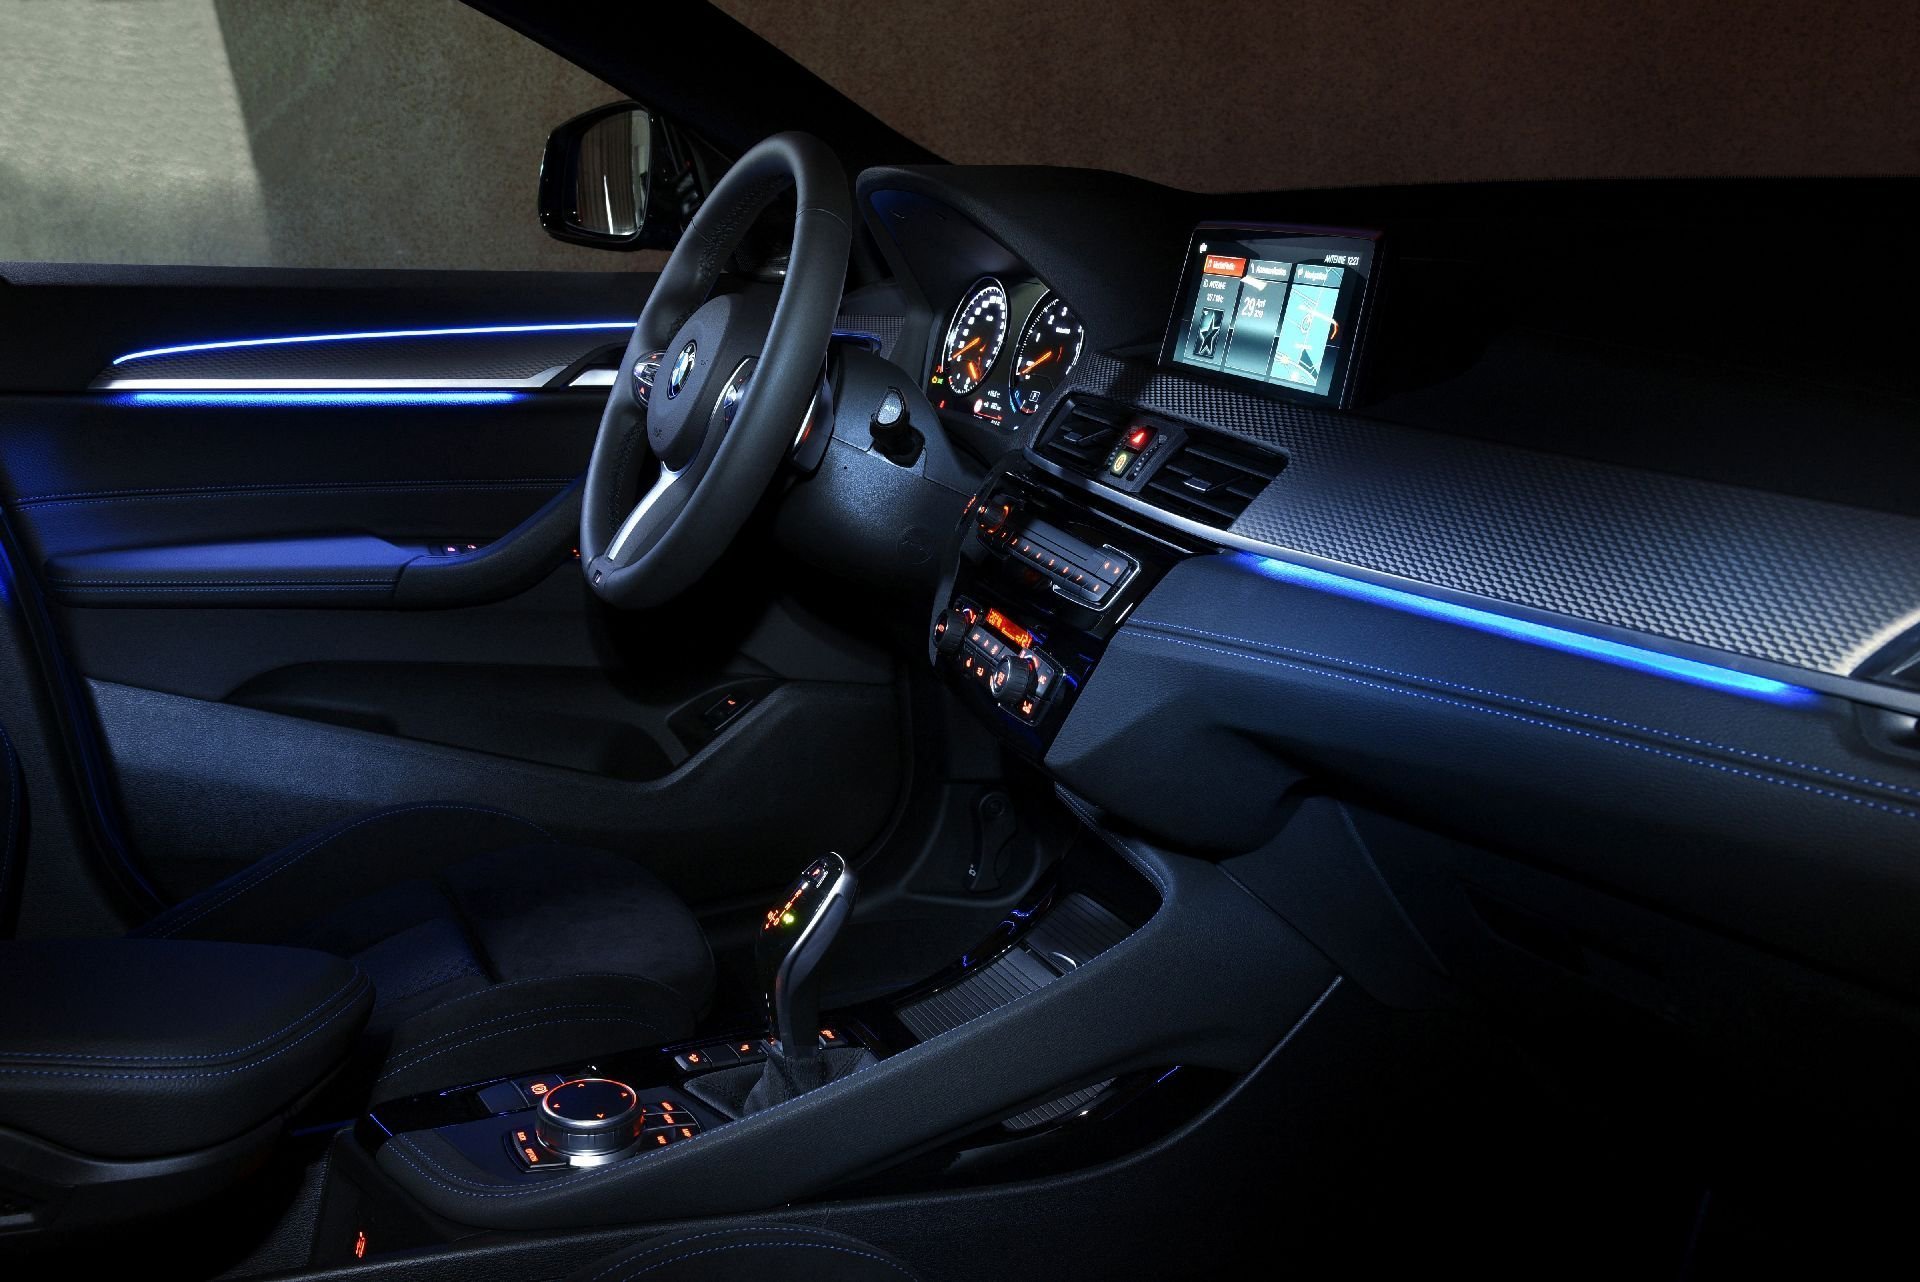 Illuminazione interna nuova BMW X2 M35i